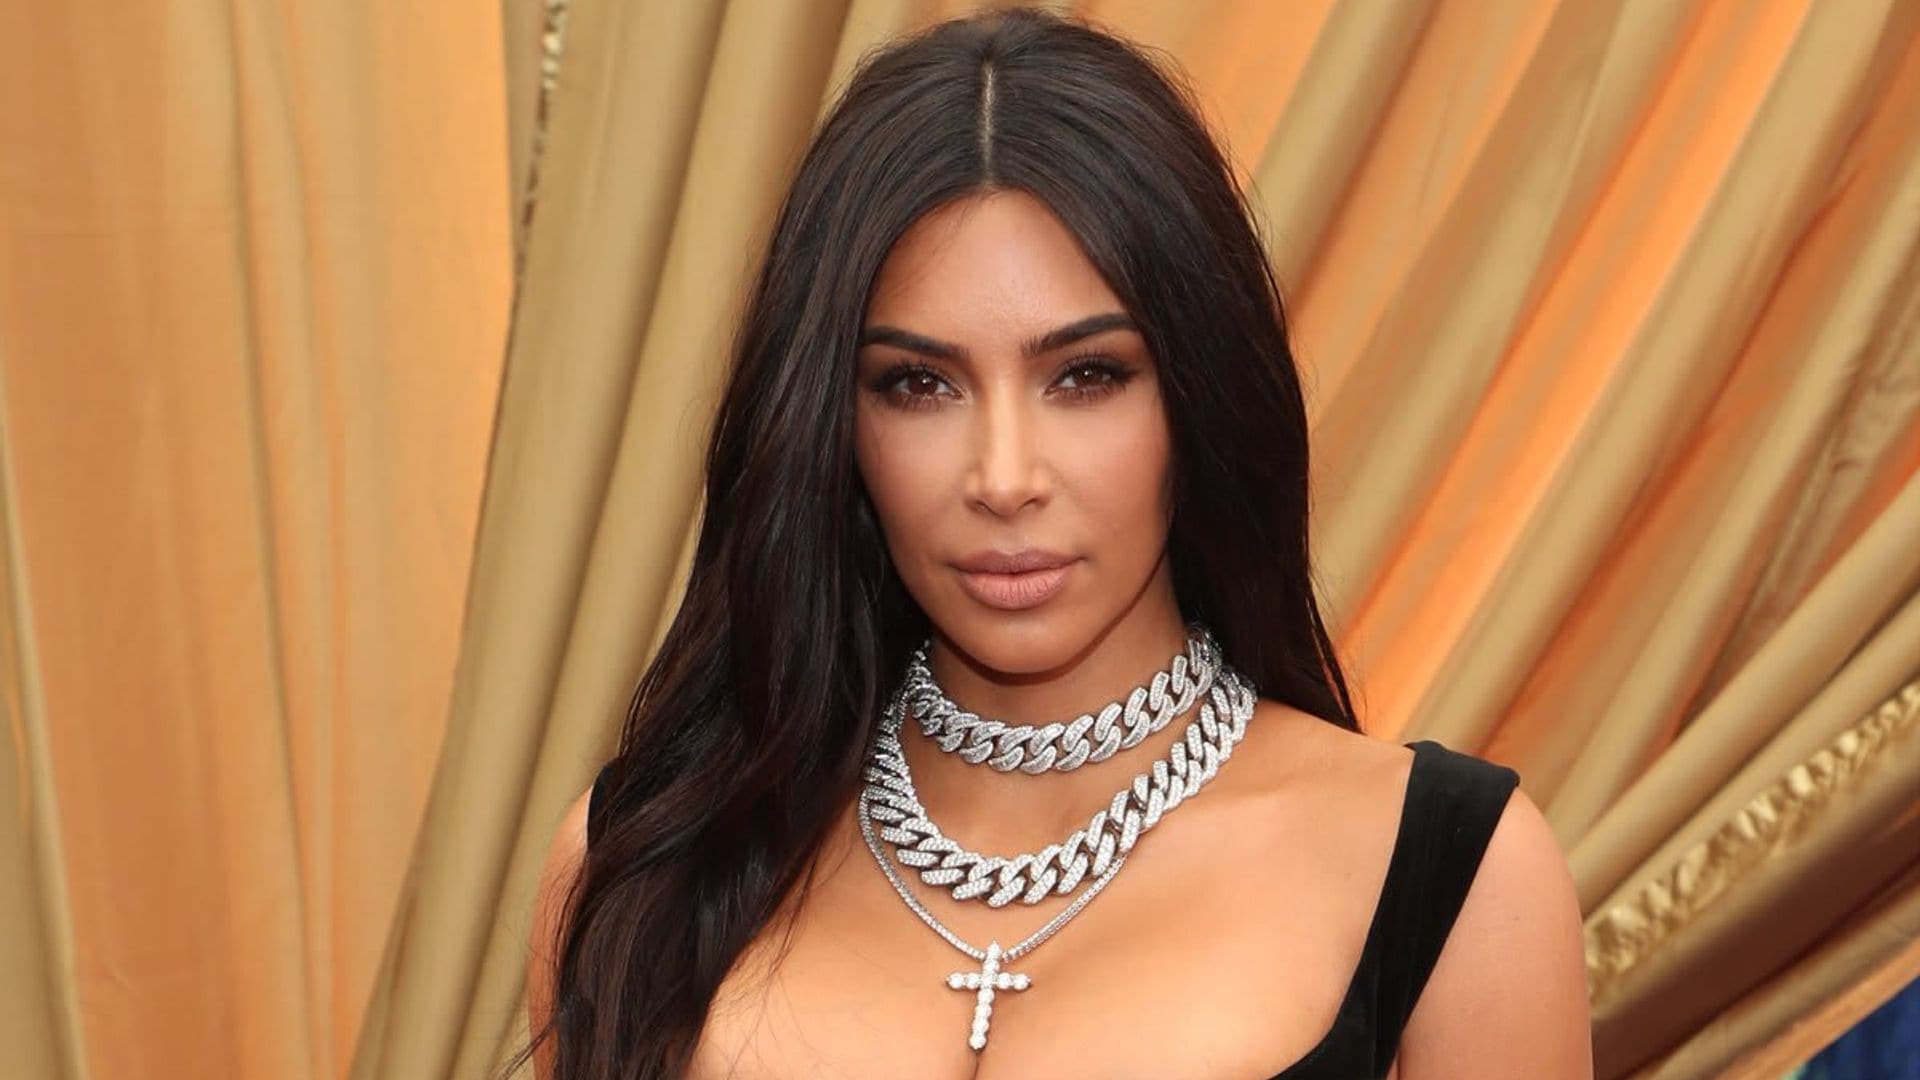 Will Kim Kardashian drop West from her name?